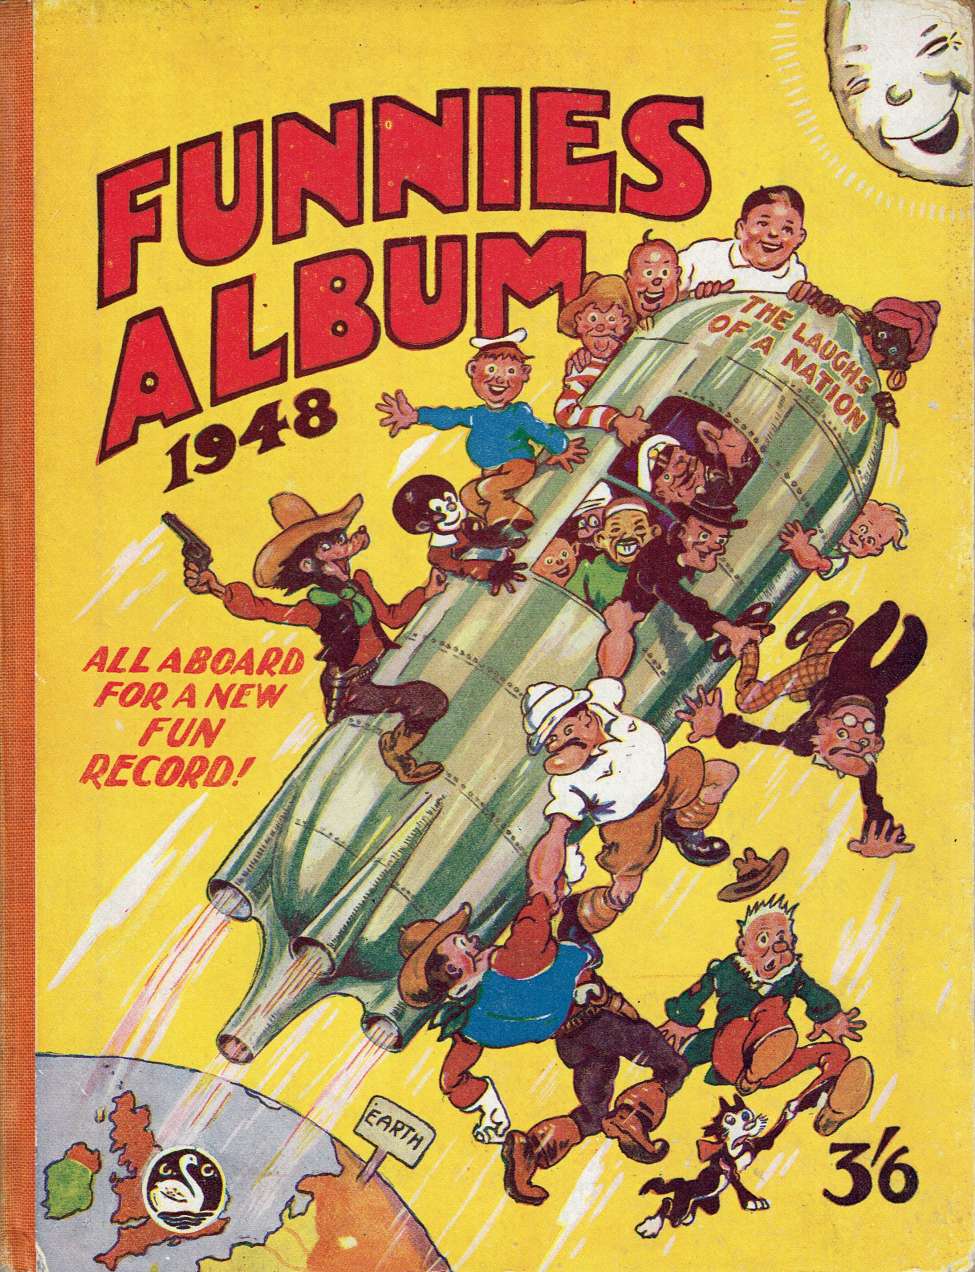 Book Cover For Funnies Album 1948 Part 1 - Version 2